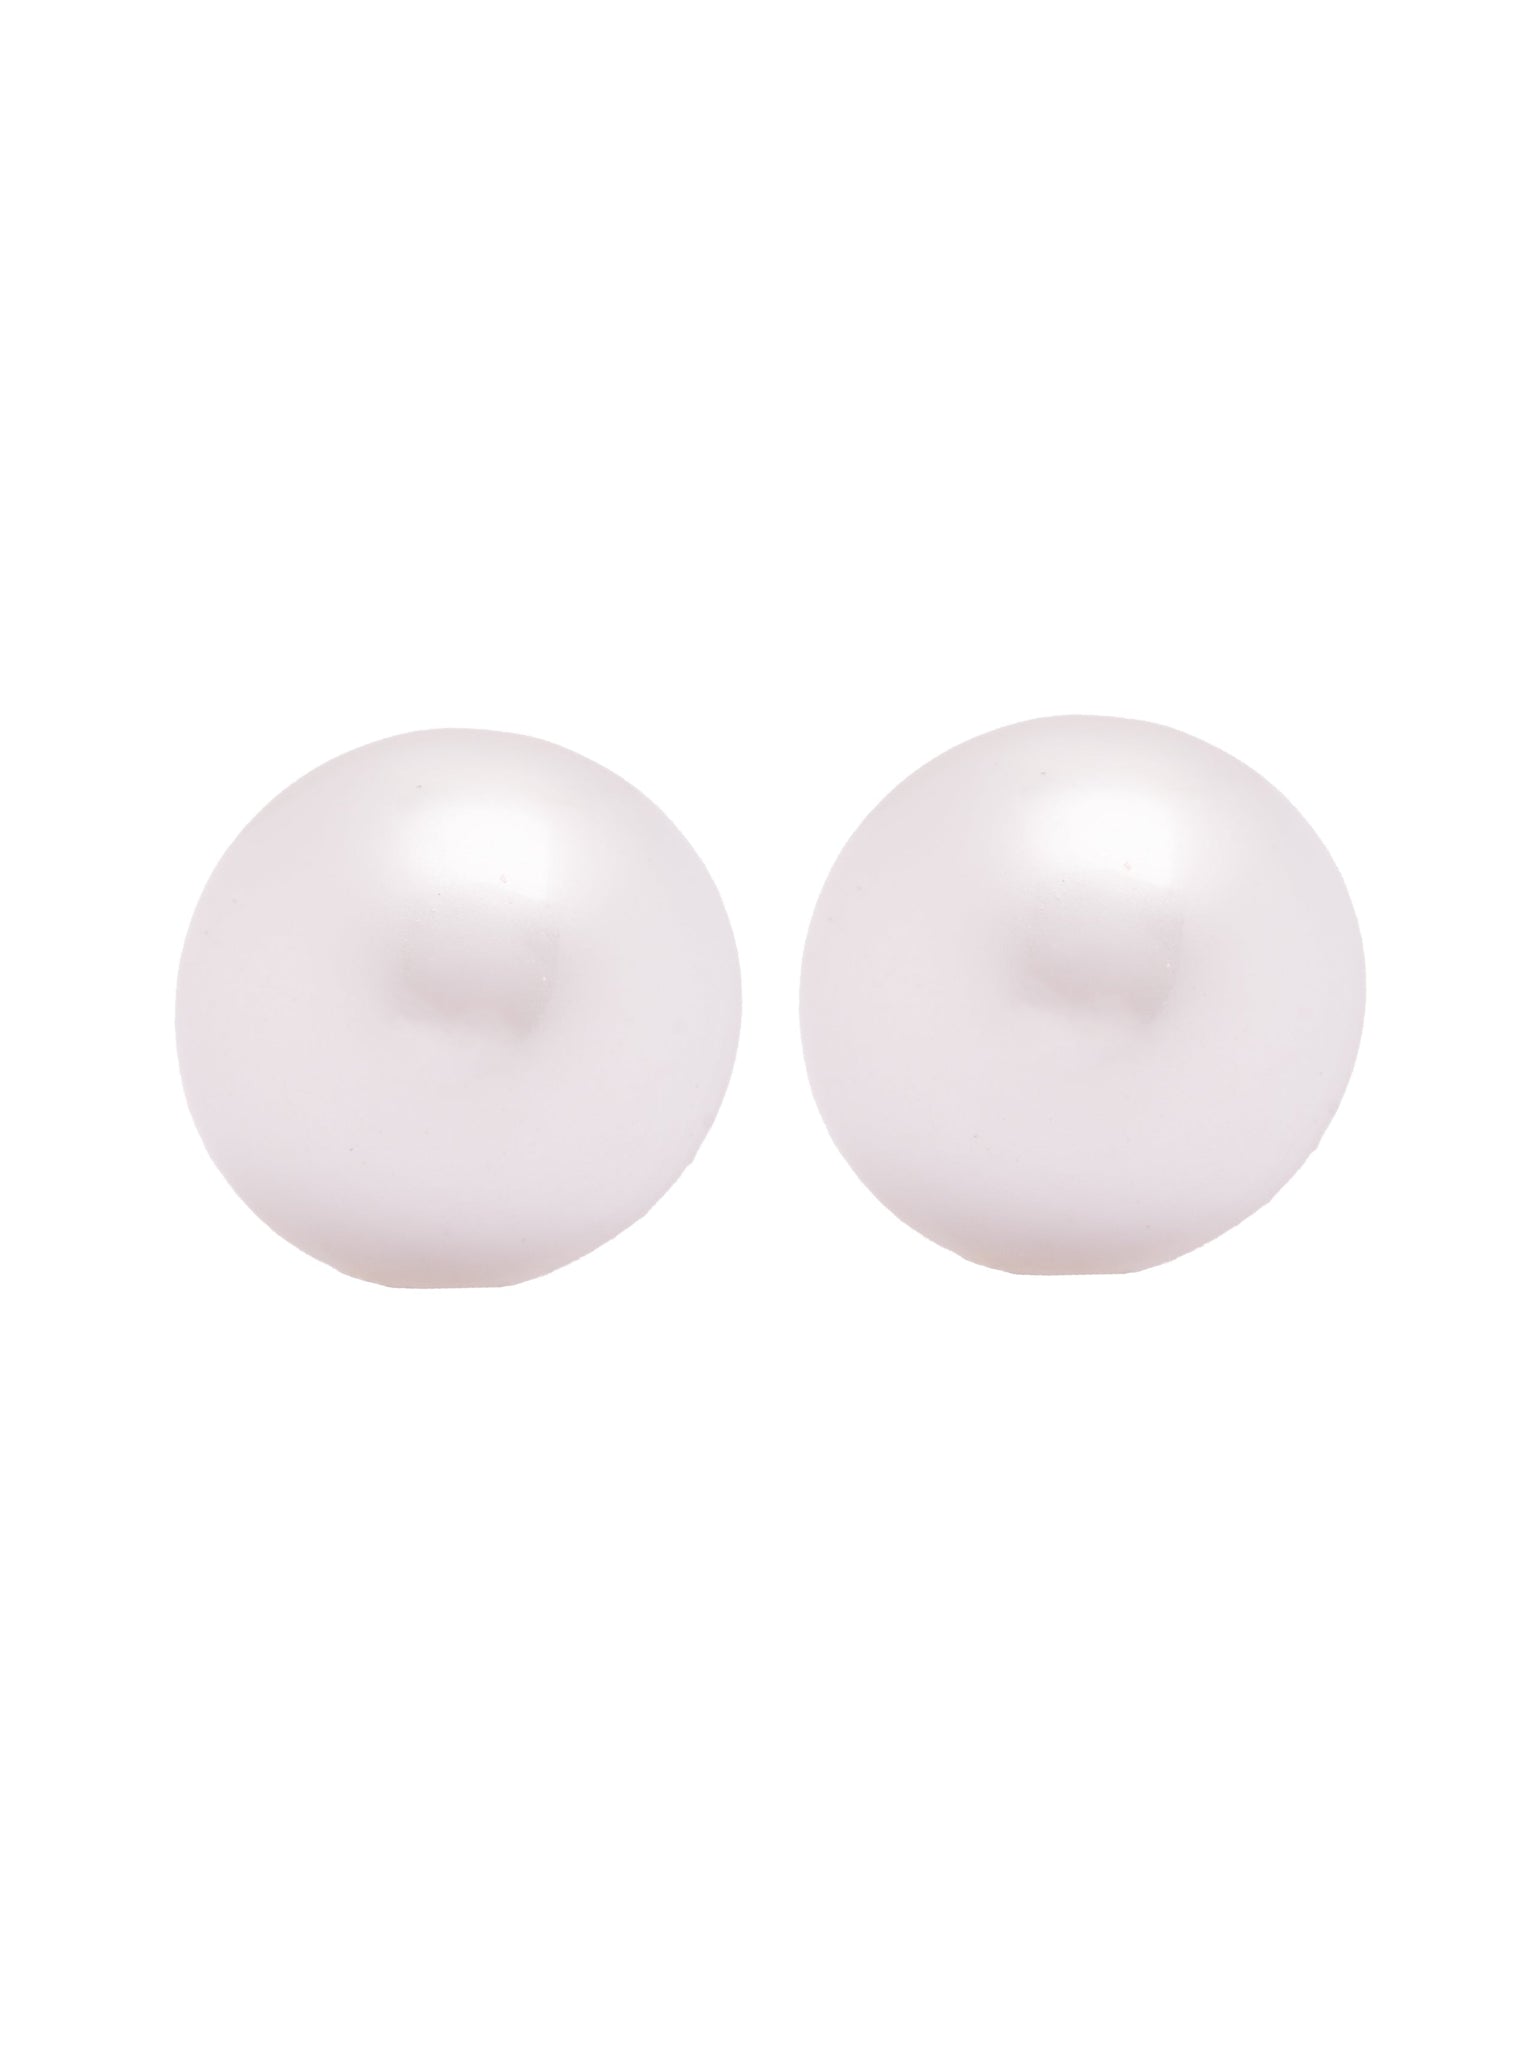 The Pearl Story - Ivory Satin Pearl Stud Earrings 